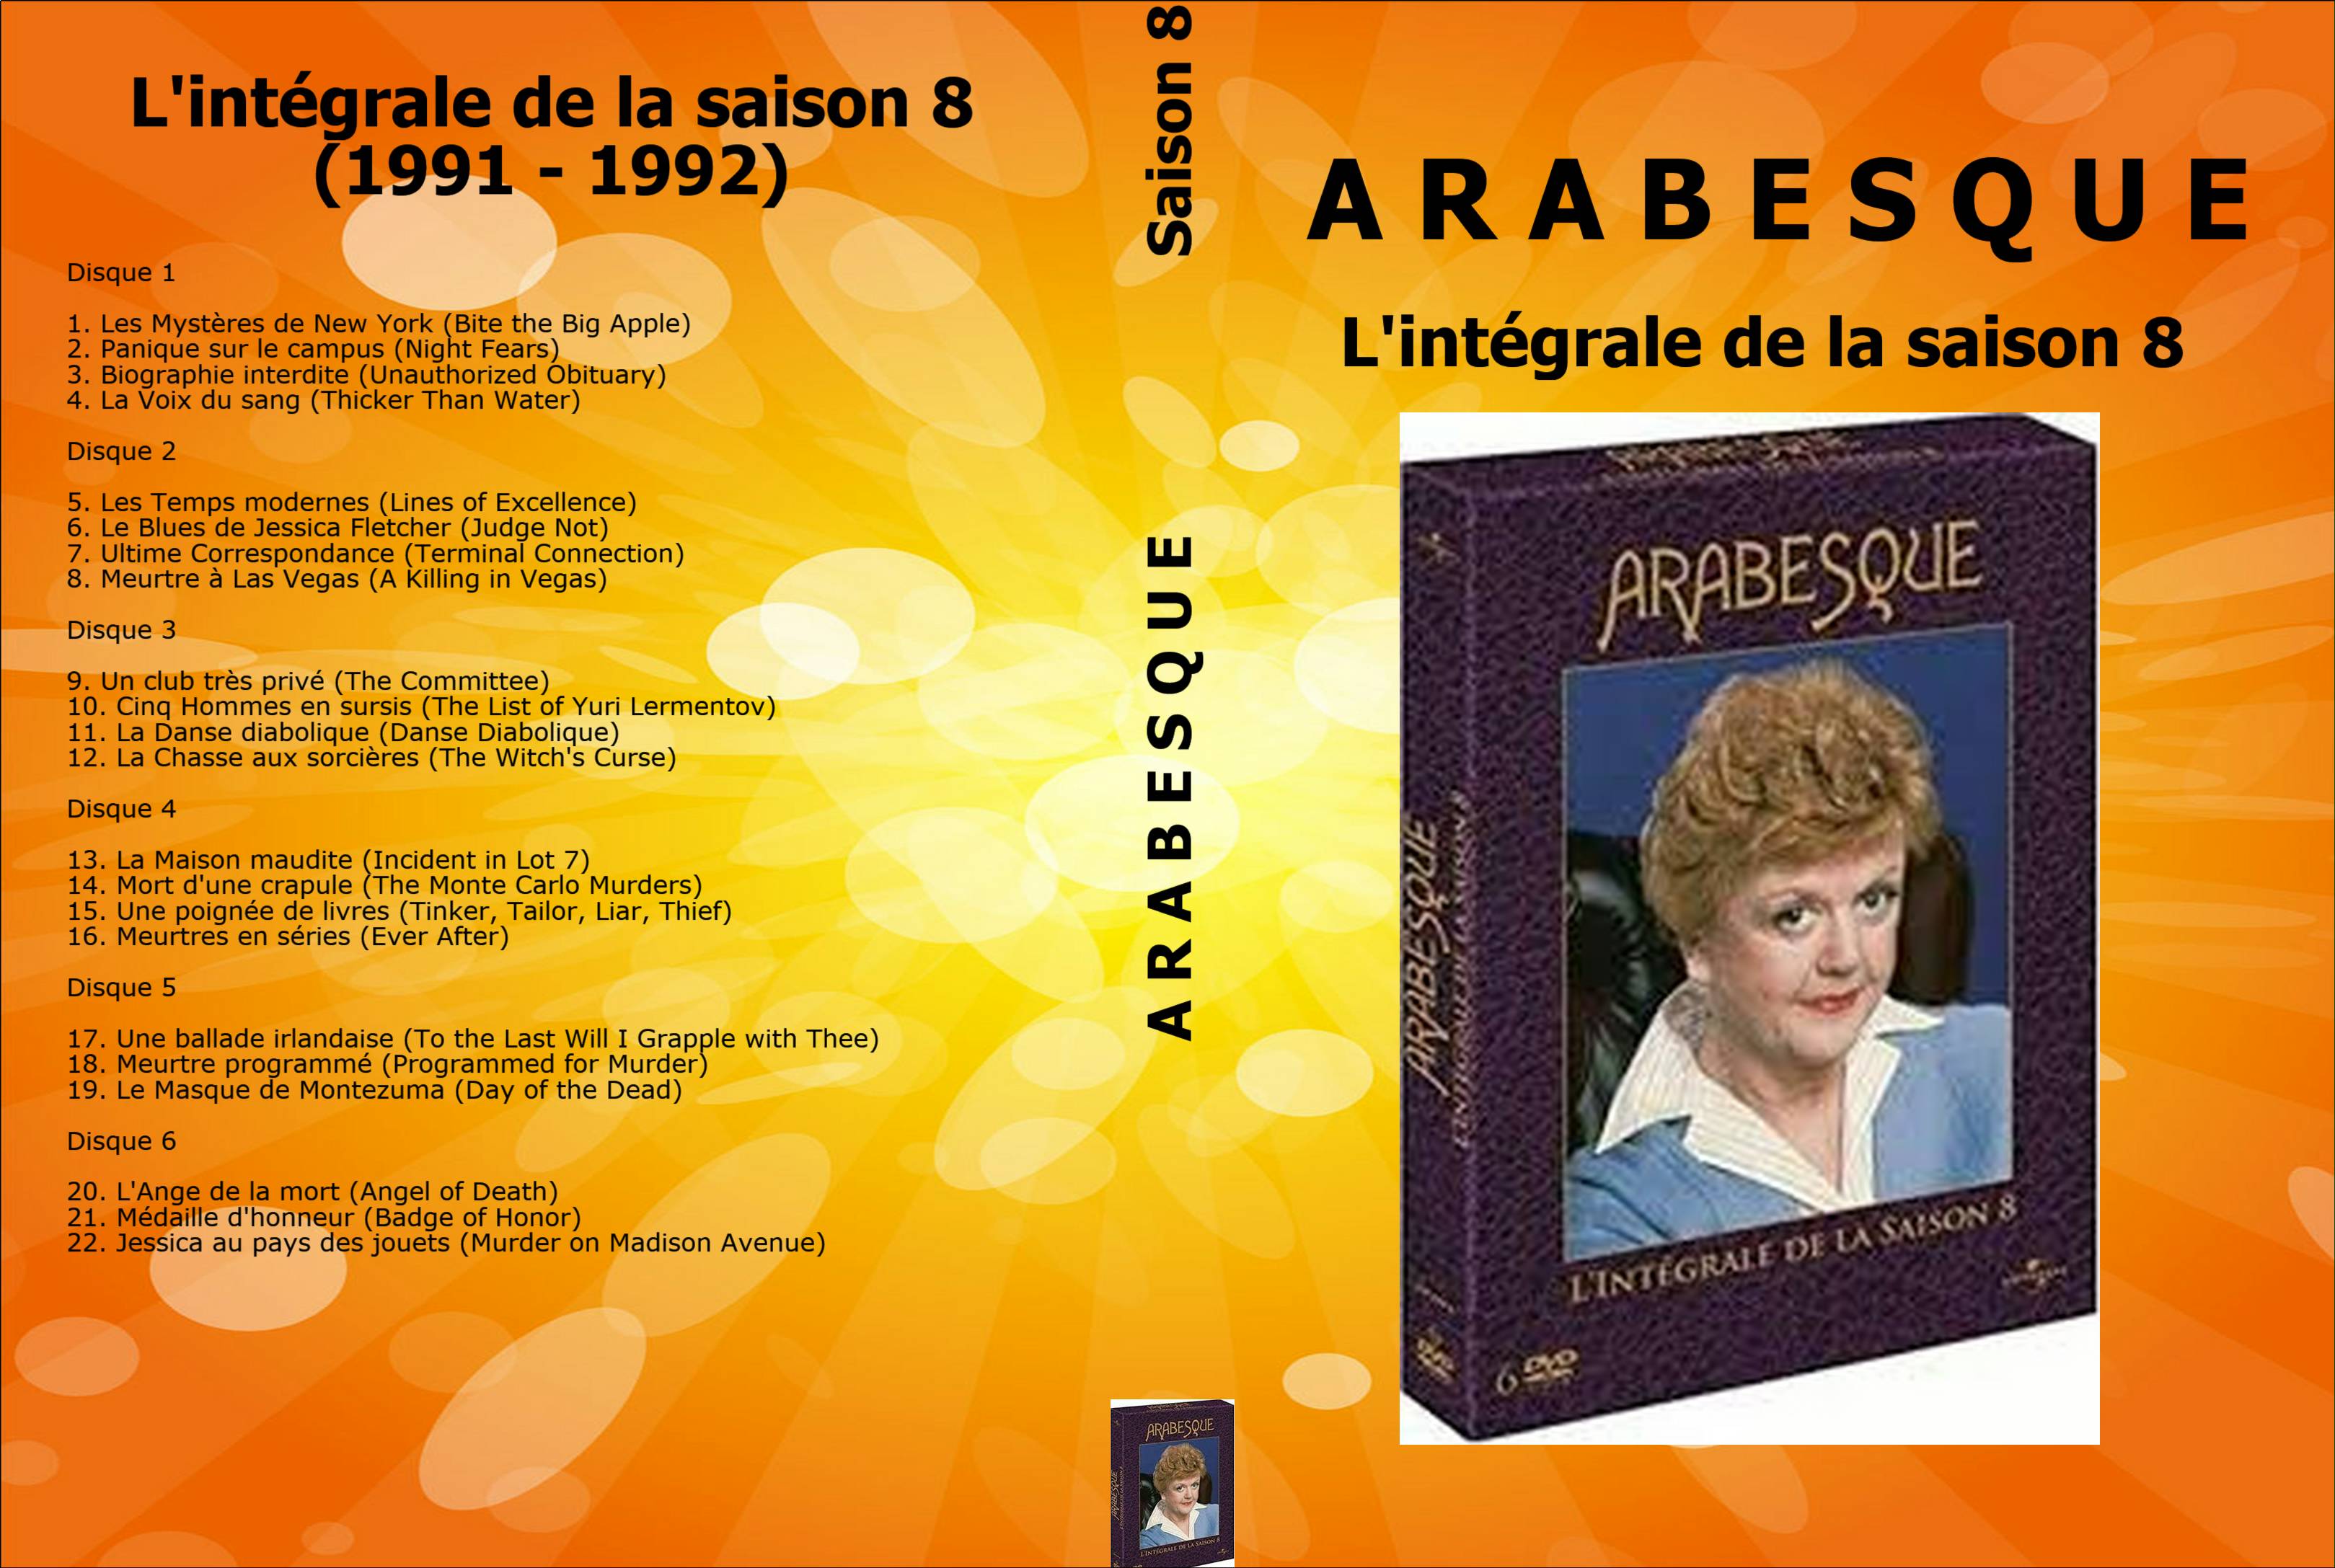 Jaquette DVD Arabesque saison 8 custom